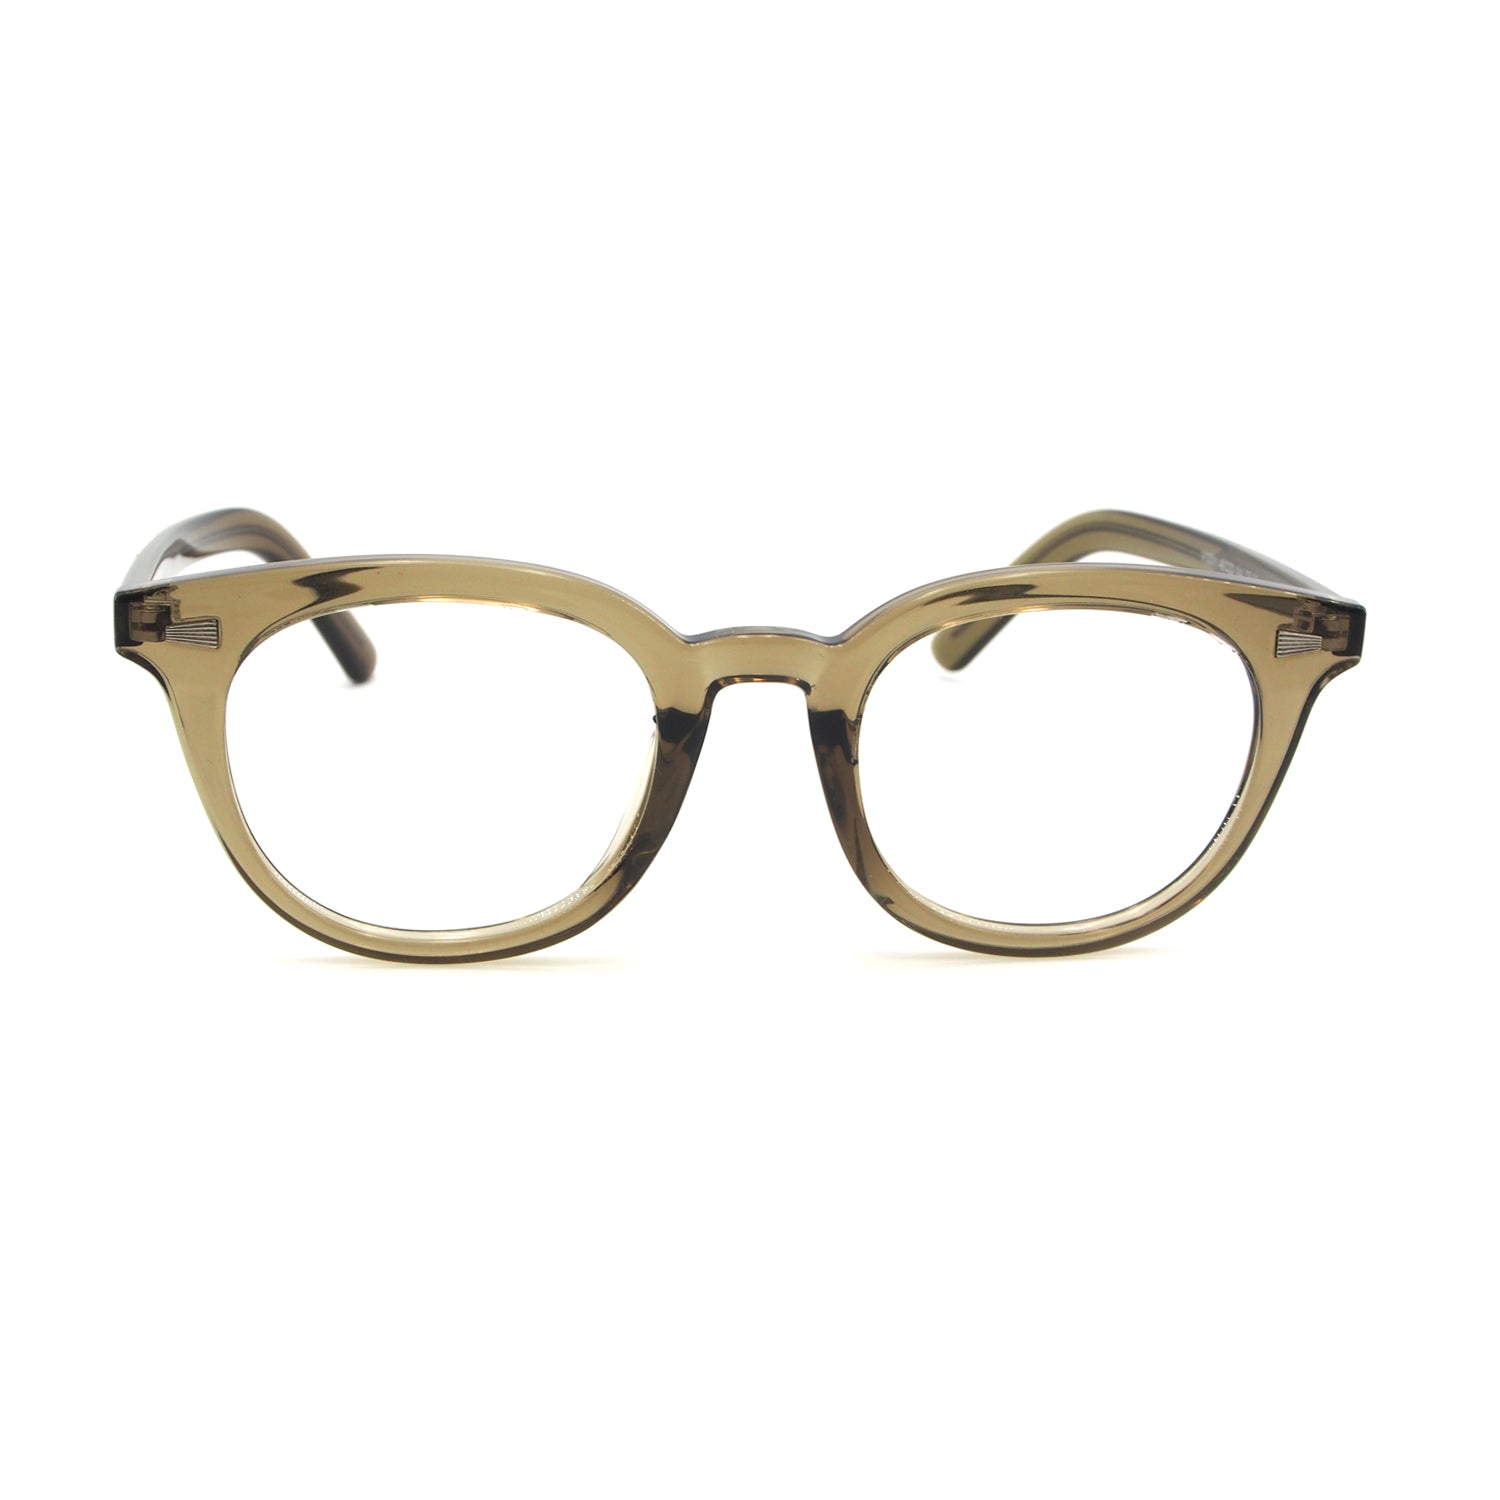 Declan in Khaki Green Eyeglasses - sightonomy